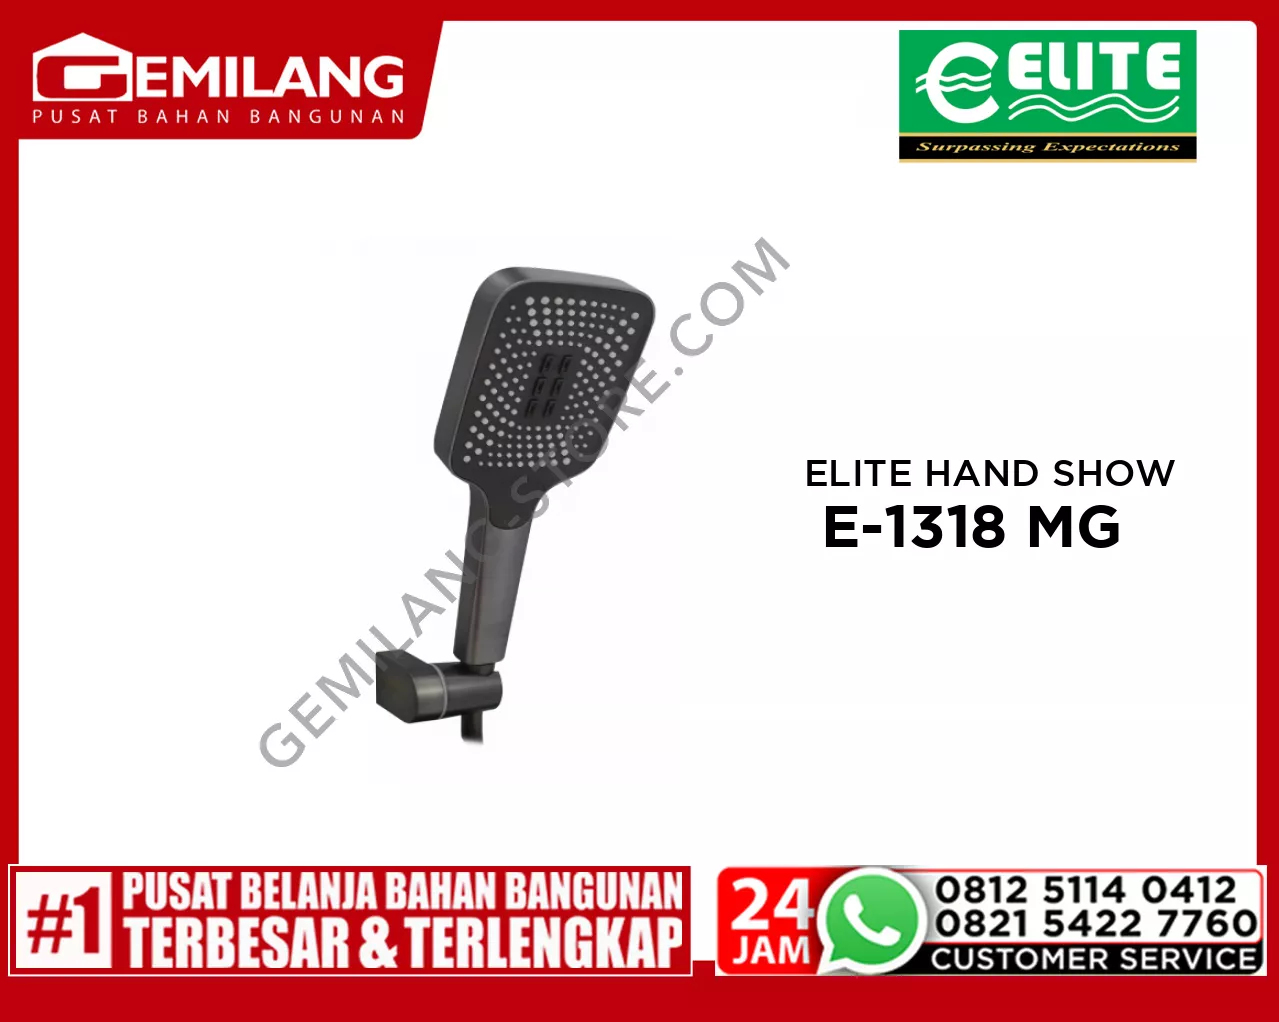 ELITE HAND SHOWER MINIMALIS SET E-1318 MG